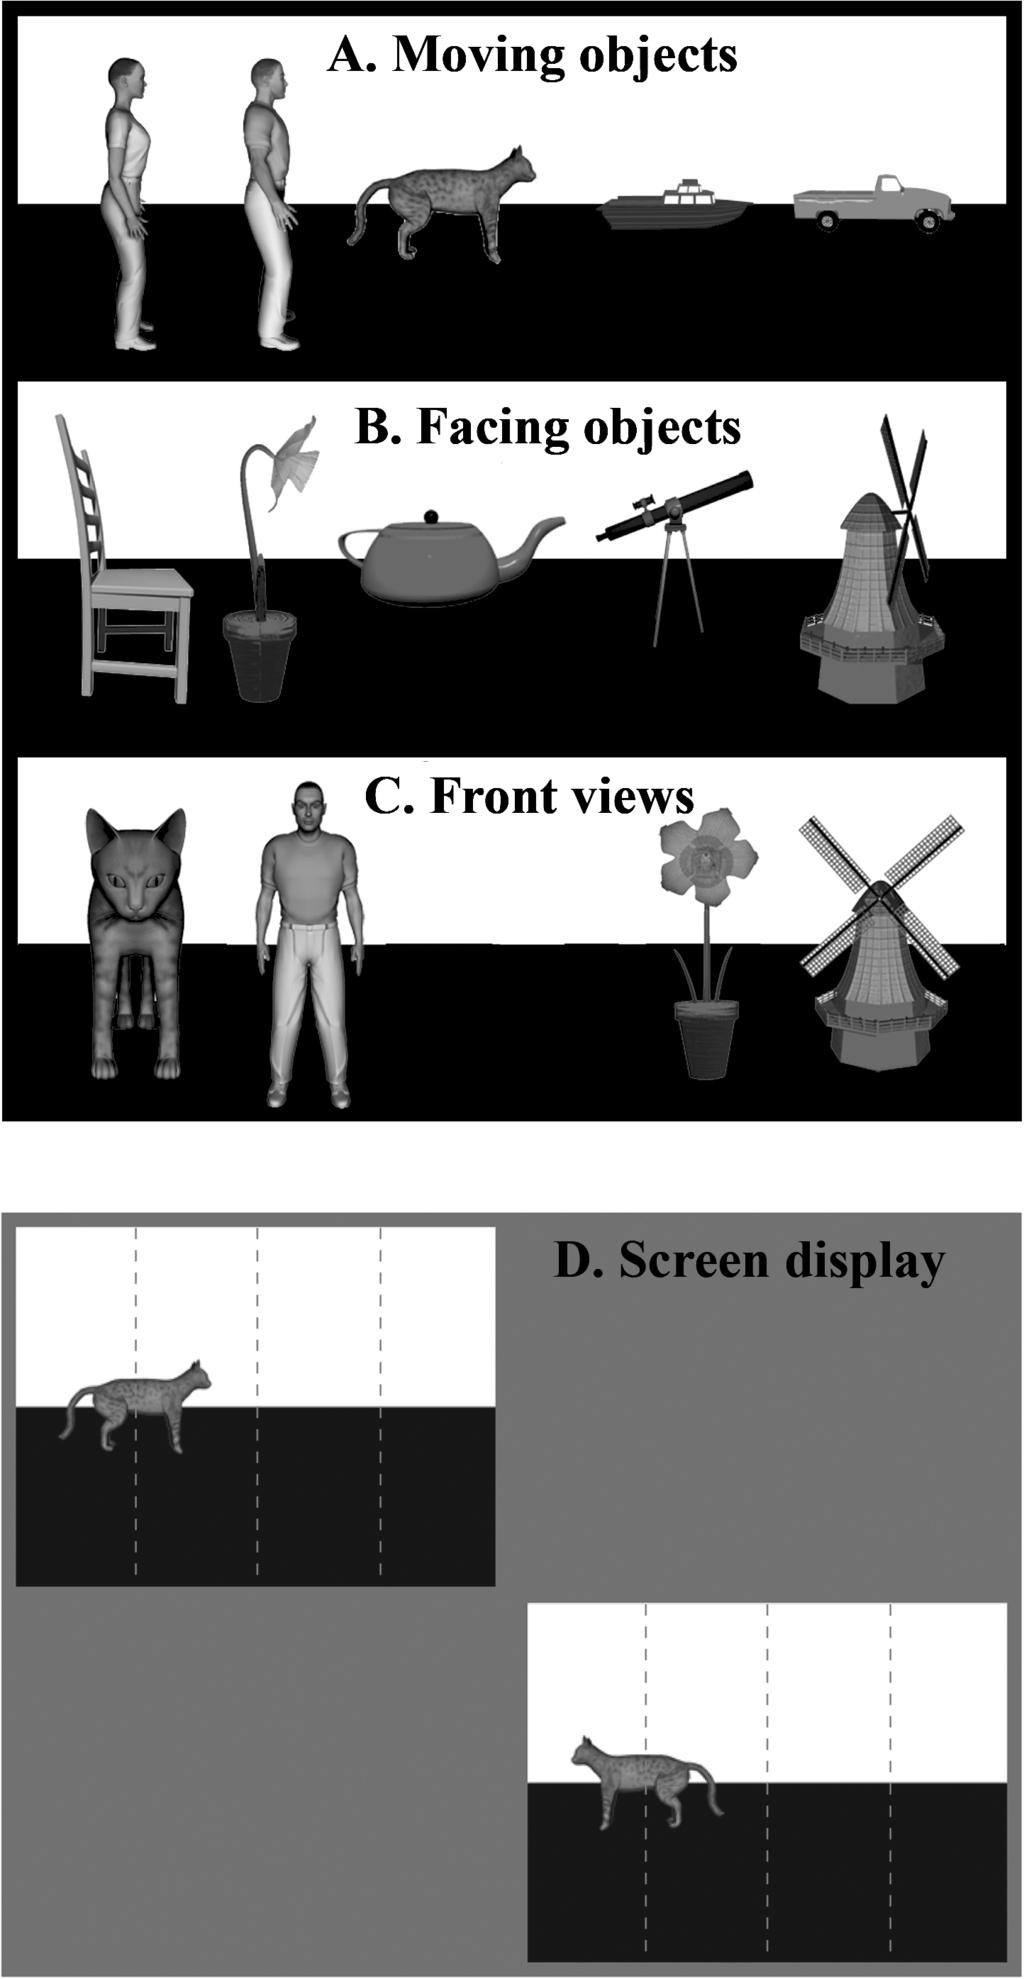 426 S. E. Palmer et al. Figure 2. Display construction in Experiment 1.